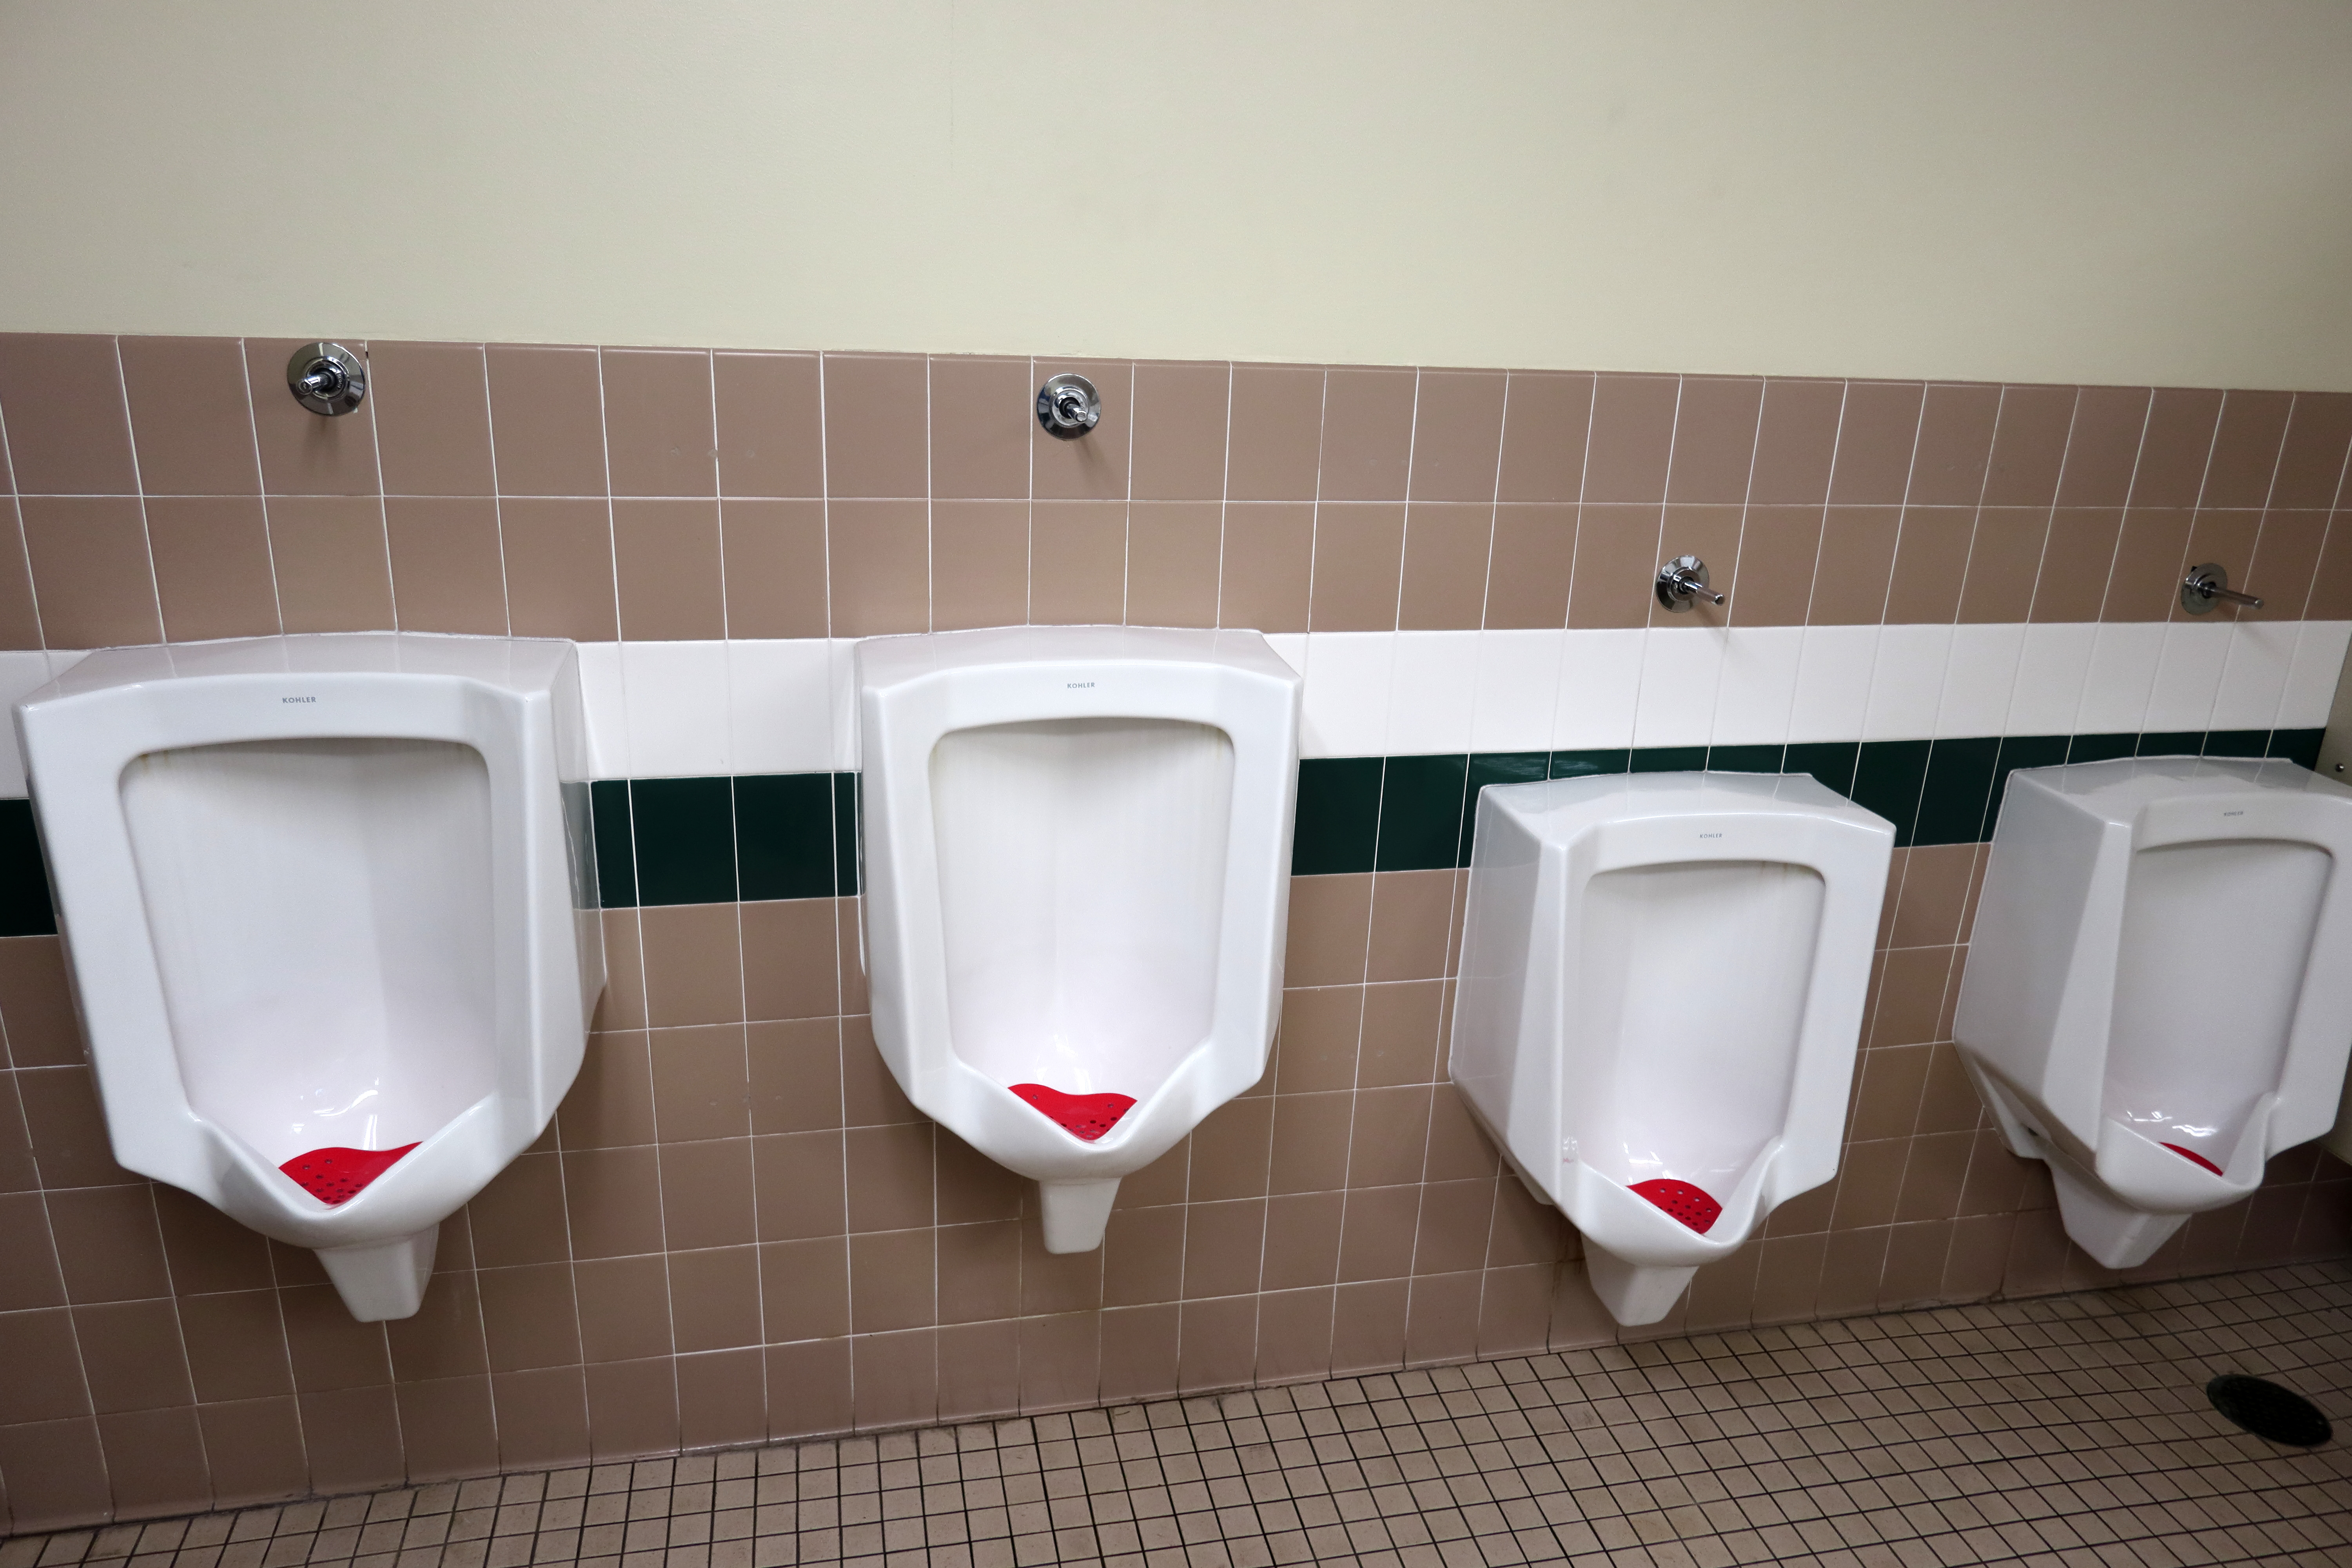 Bathroom Stalls in men's bathroom image - Free stock photo - Public Domain  photo - CC0 Images